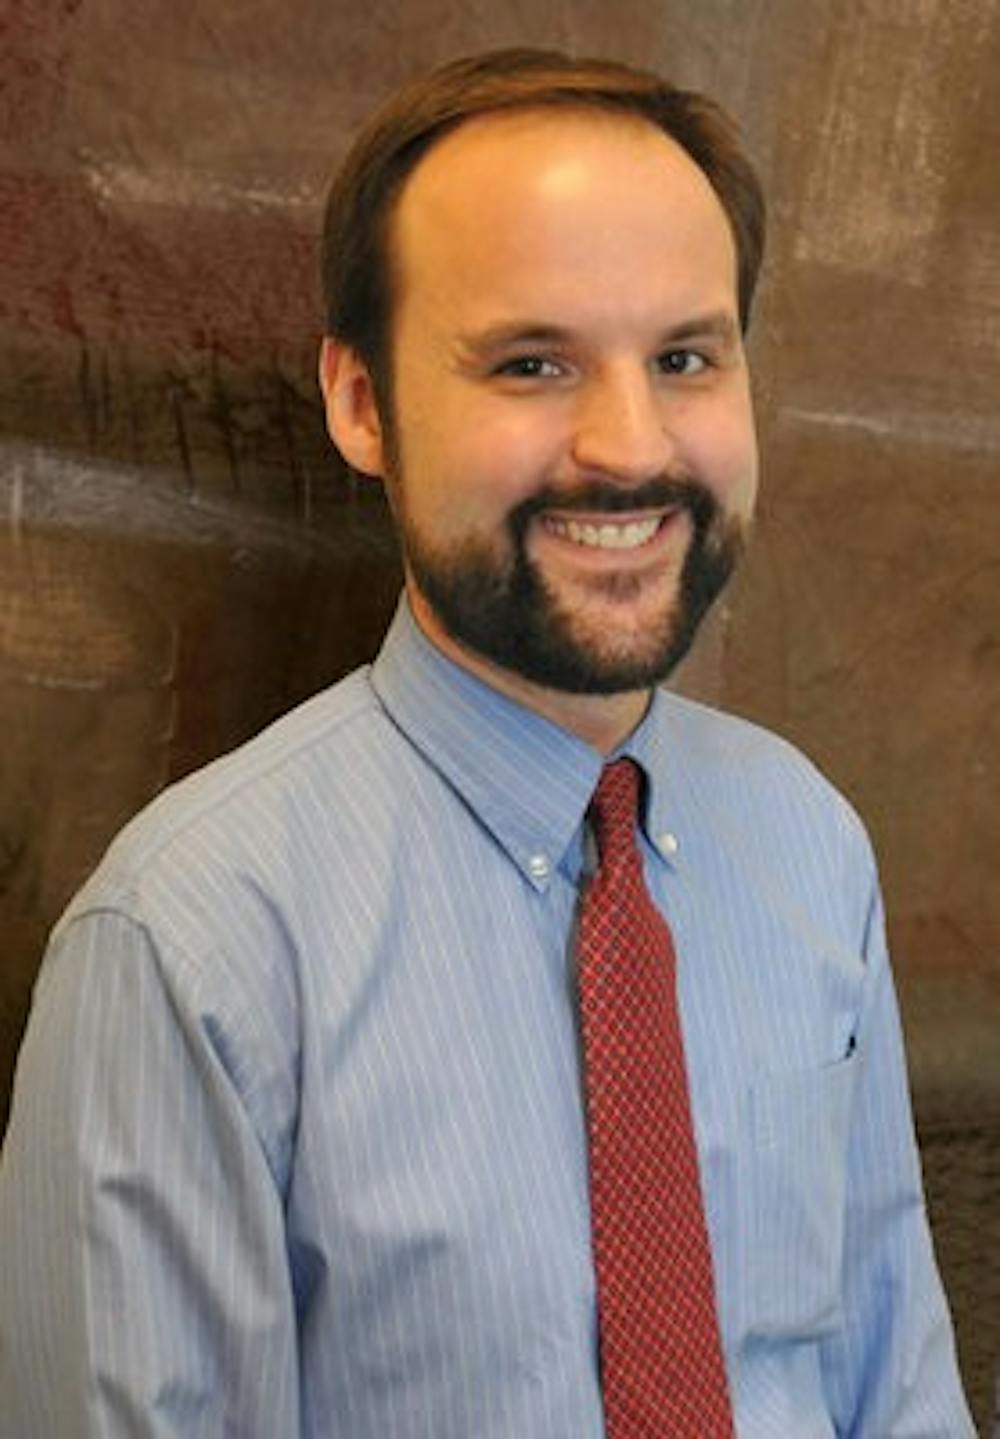 Chris Warren, director of libraries for the City of Auburn